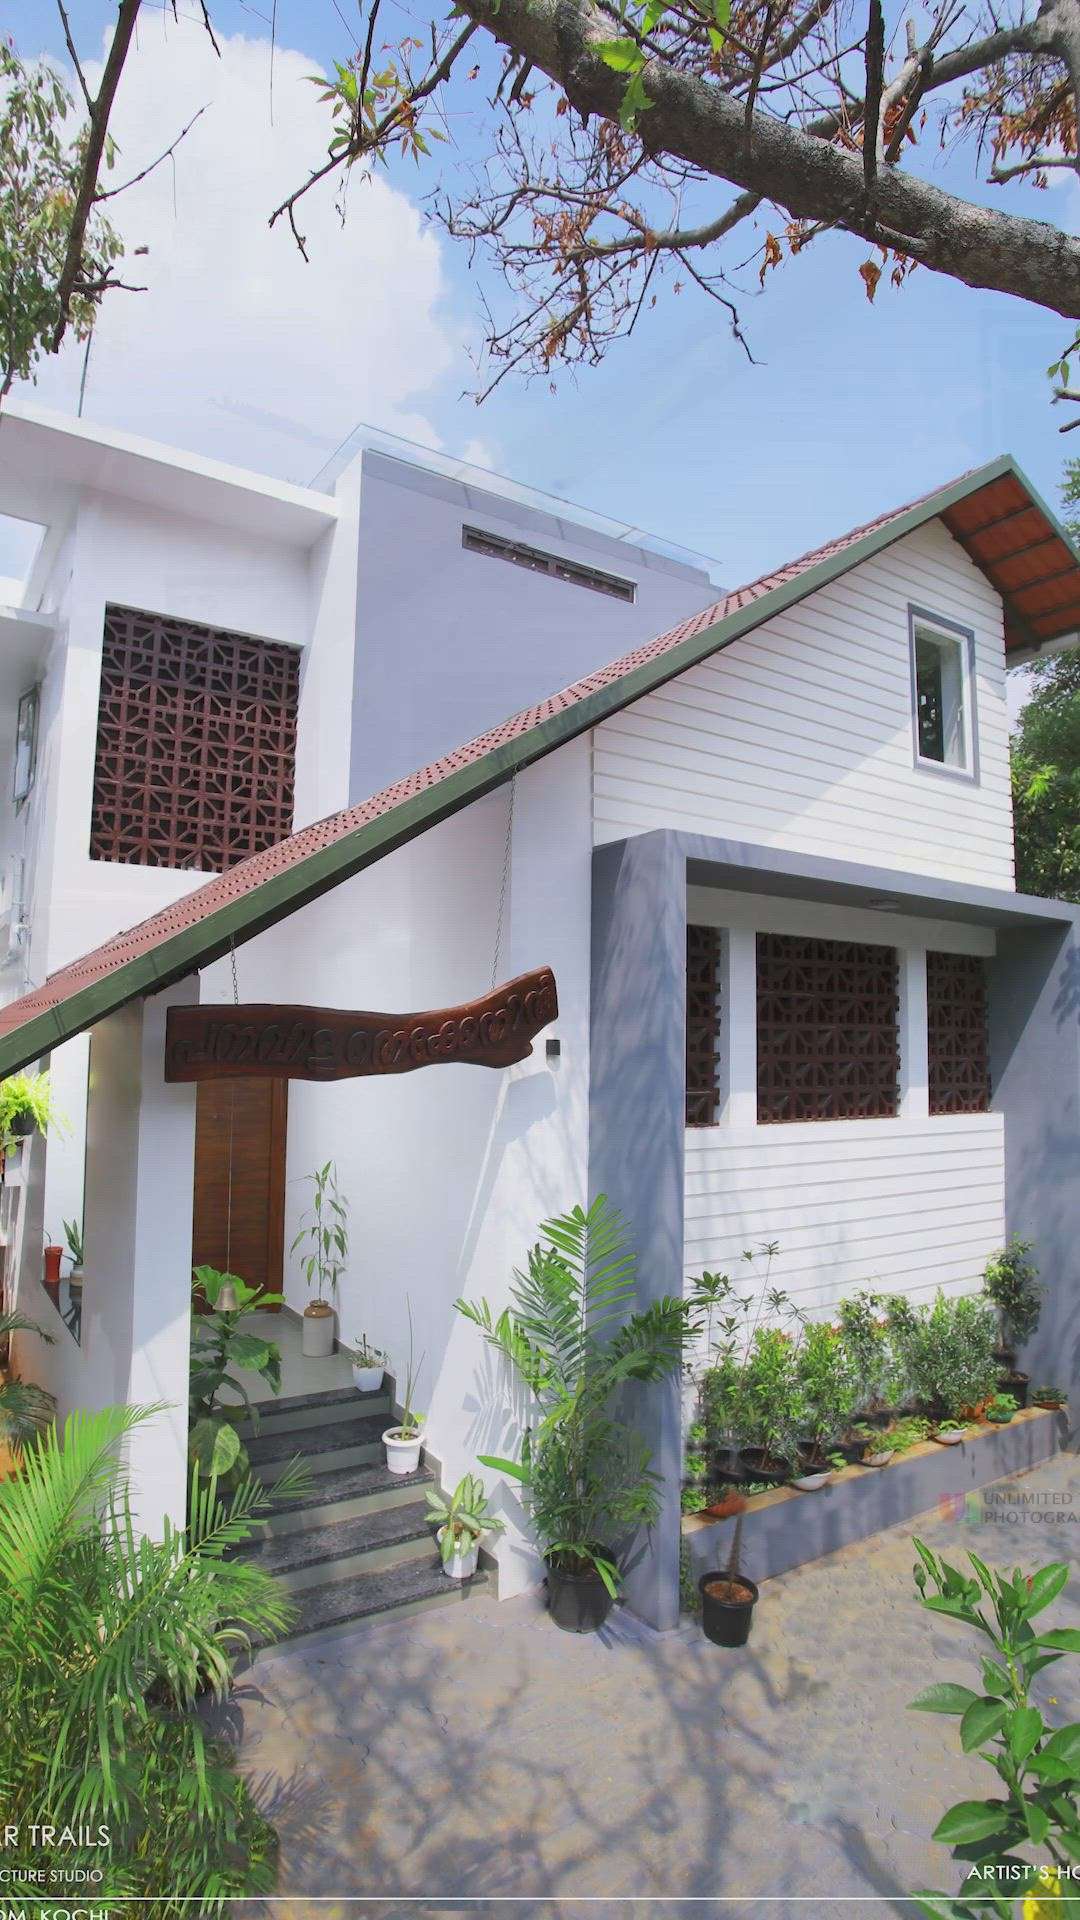 38 lakhs | 1720 Sqft | 3BHK

THE ARTIST'S HOUSE

നഗരമധ്യത്തിലെ നാലര സെൻ്റിൽ പച്ചപ്പ് നിറഞ്ഞ വീട് .
Green concept house in 4.5 cents designed at the heart of Ernakulam

𝗣𝗥𝗢𝗝𝗘𝗖𝗧 𝗗𝗘𝗧𝗔𝗜𝗟𝗦:
Client: T S Asha Devi @chandumeghanadan
Budget : 38 lakhs
Area : 1720sqft
Rooms : 3 bhk
Plot: 4.5 cents

𝗗𝗘𝗦𝗜𝗚𝗡𝗘𝗥 𝗗𝗘𝗧𝗔𝗜𝗟𝗦:
@linear_trails_architecture

Design Team
@rhea_chungath
@_diyageorge_
@ar_janphilip

Contact us lineartrailsarchitecture@gmail.com

𝗣𝗛𝗢𝗧𝗢 𝗖𝗥𝗘𝗗𝗜𝗧𝗦: : Unlimited Tales @unlimitedtales

Kolo - India’s Largest Home Construction Community 🏠

#fyp #reelitfeelit #koloapp #instagood #interiordesign #interior #interiordesigner #homedecoration #homedesign #home #homedesignideas #keralahomes #homedecor #homes #homestyling #traditional #kerala #homesweethome #architecturedesign #architecture #keralaarchitecture #architecture #modernarchitecture